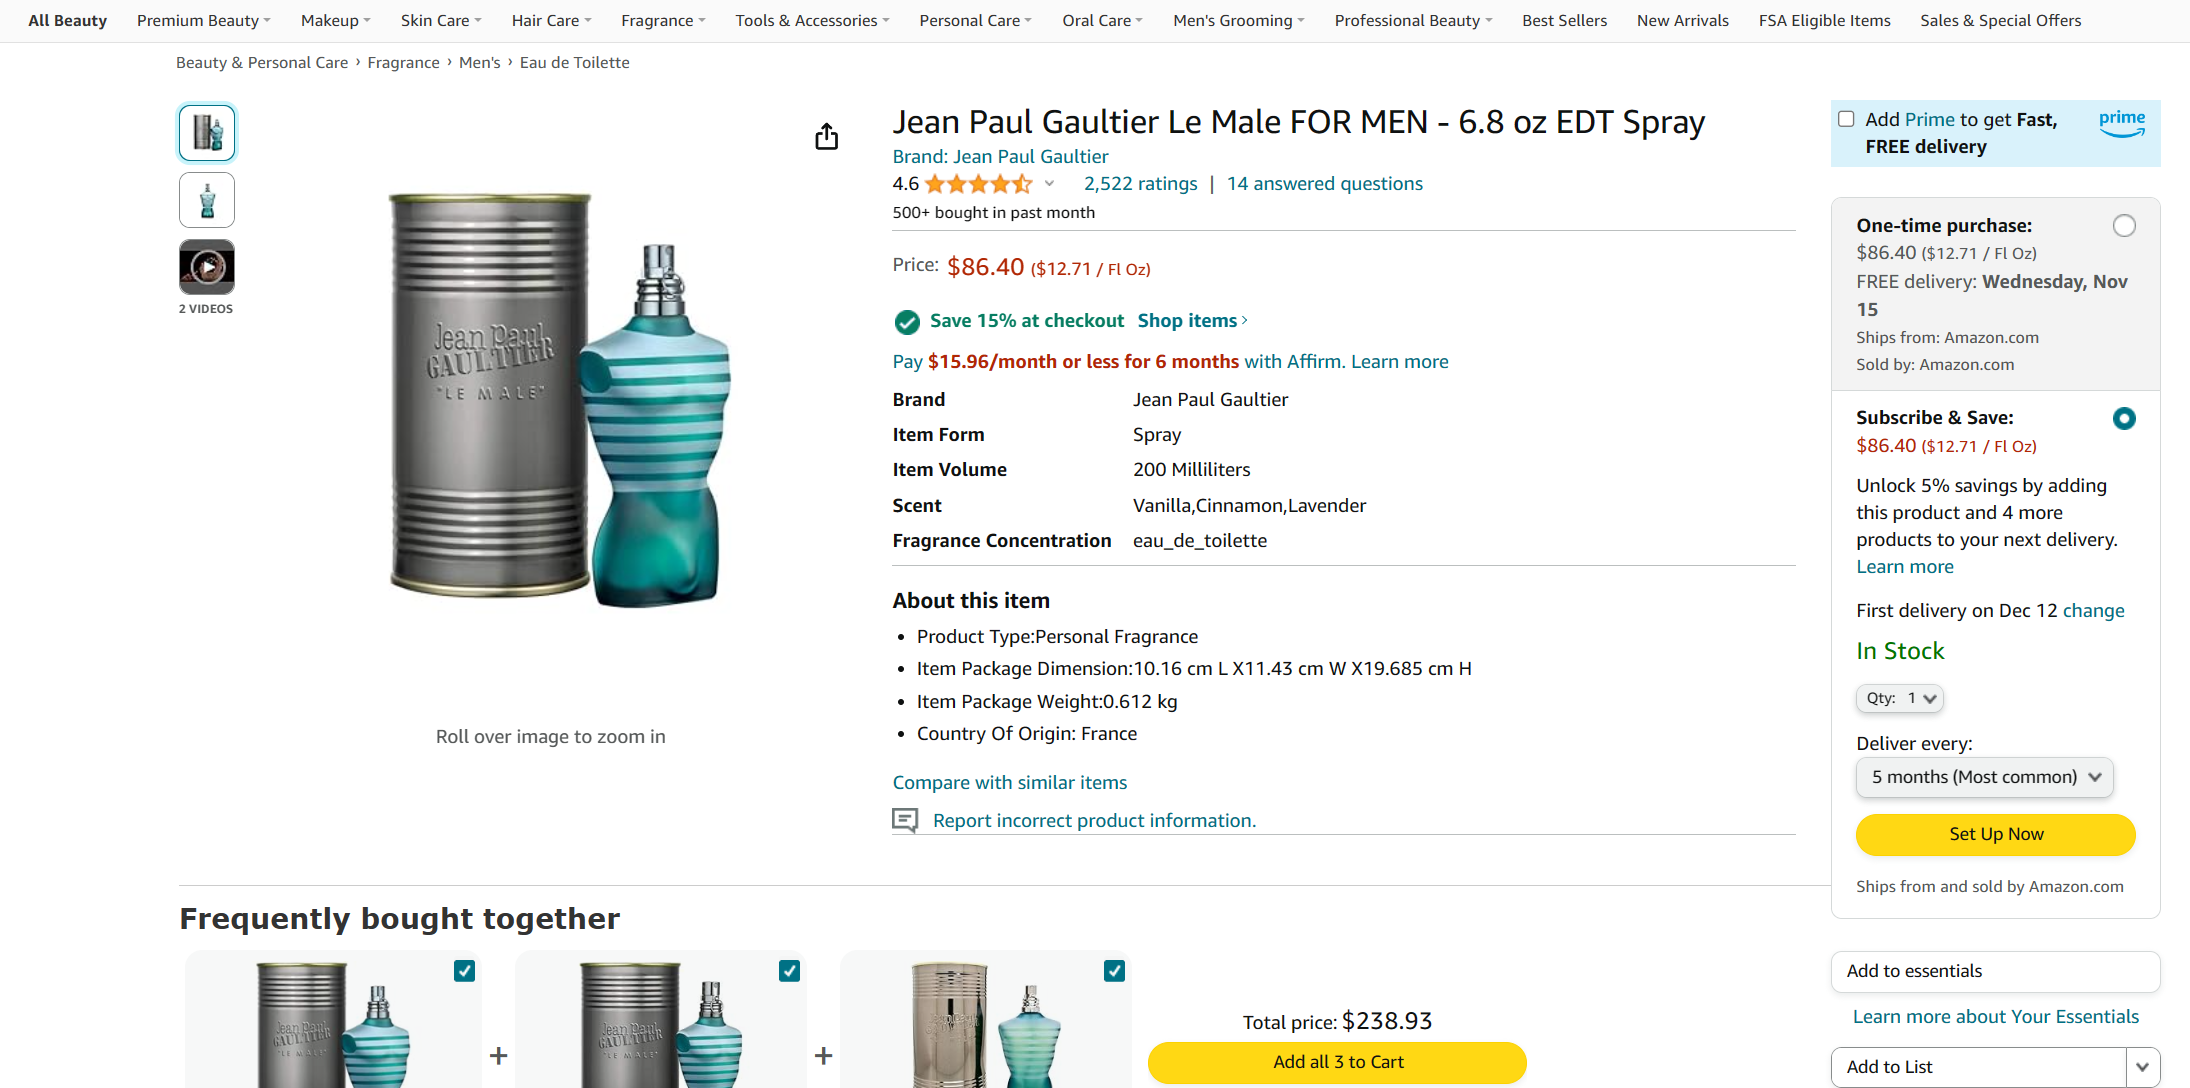 Jean Paul Gaultier Le Male FOR MEN - 6.8 oz EDT Spray $73.44